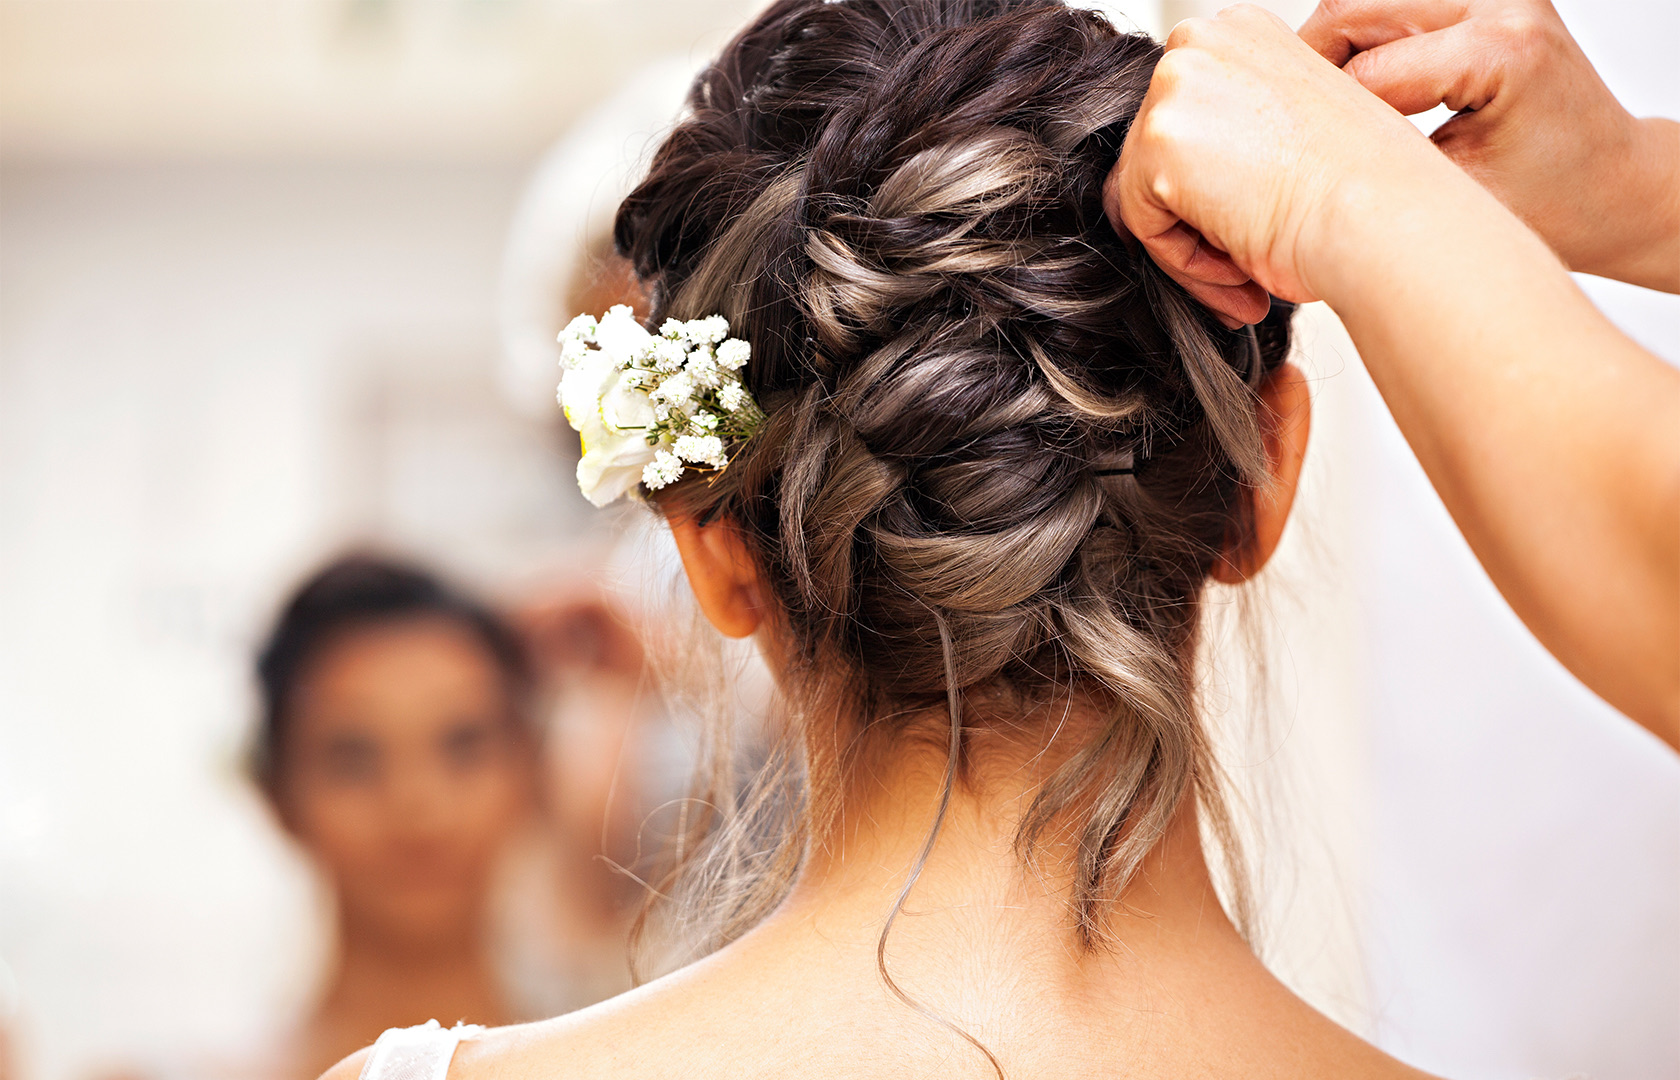 hair touchup for bride